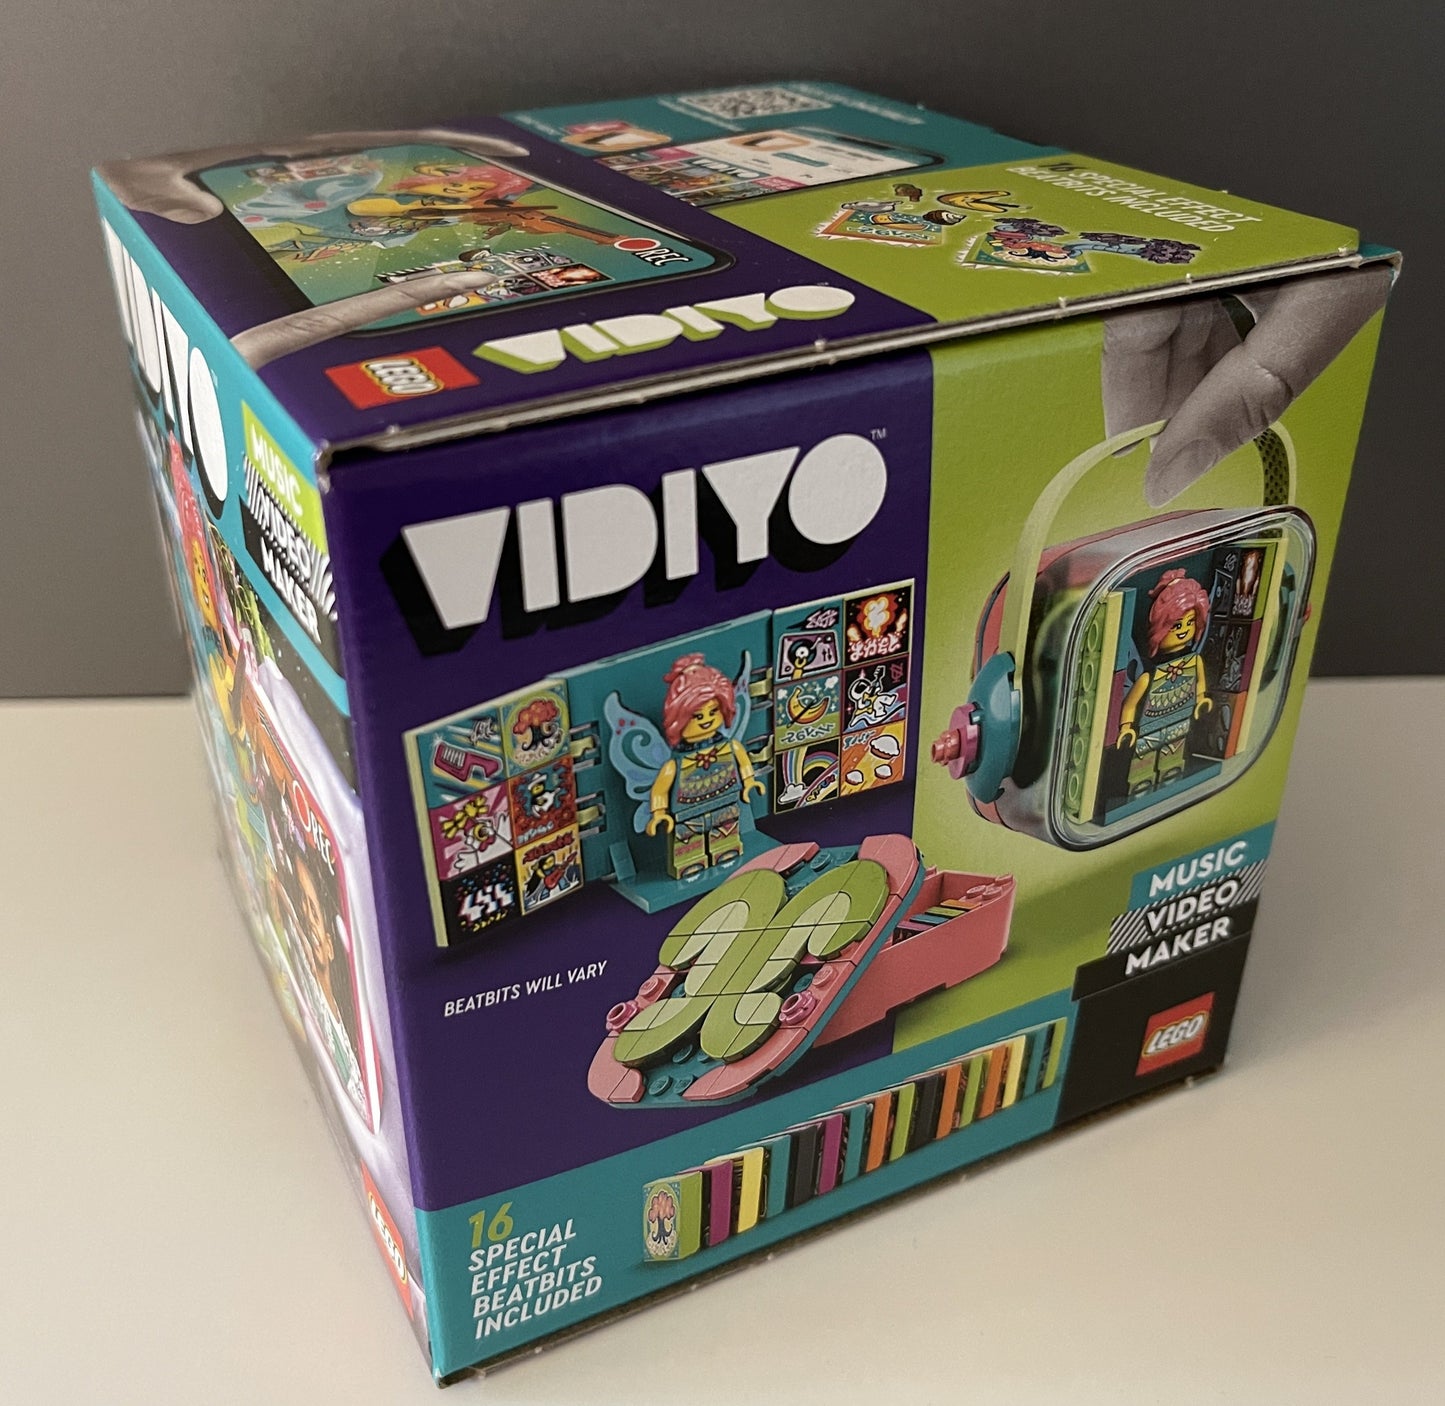 LEGO Vidiyo Folk Fairy Beatbox Music Video Maker (43110) from 7 years 